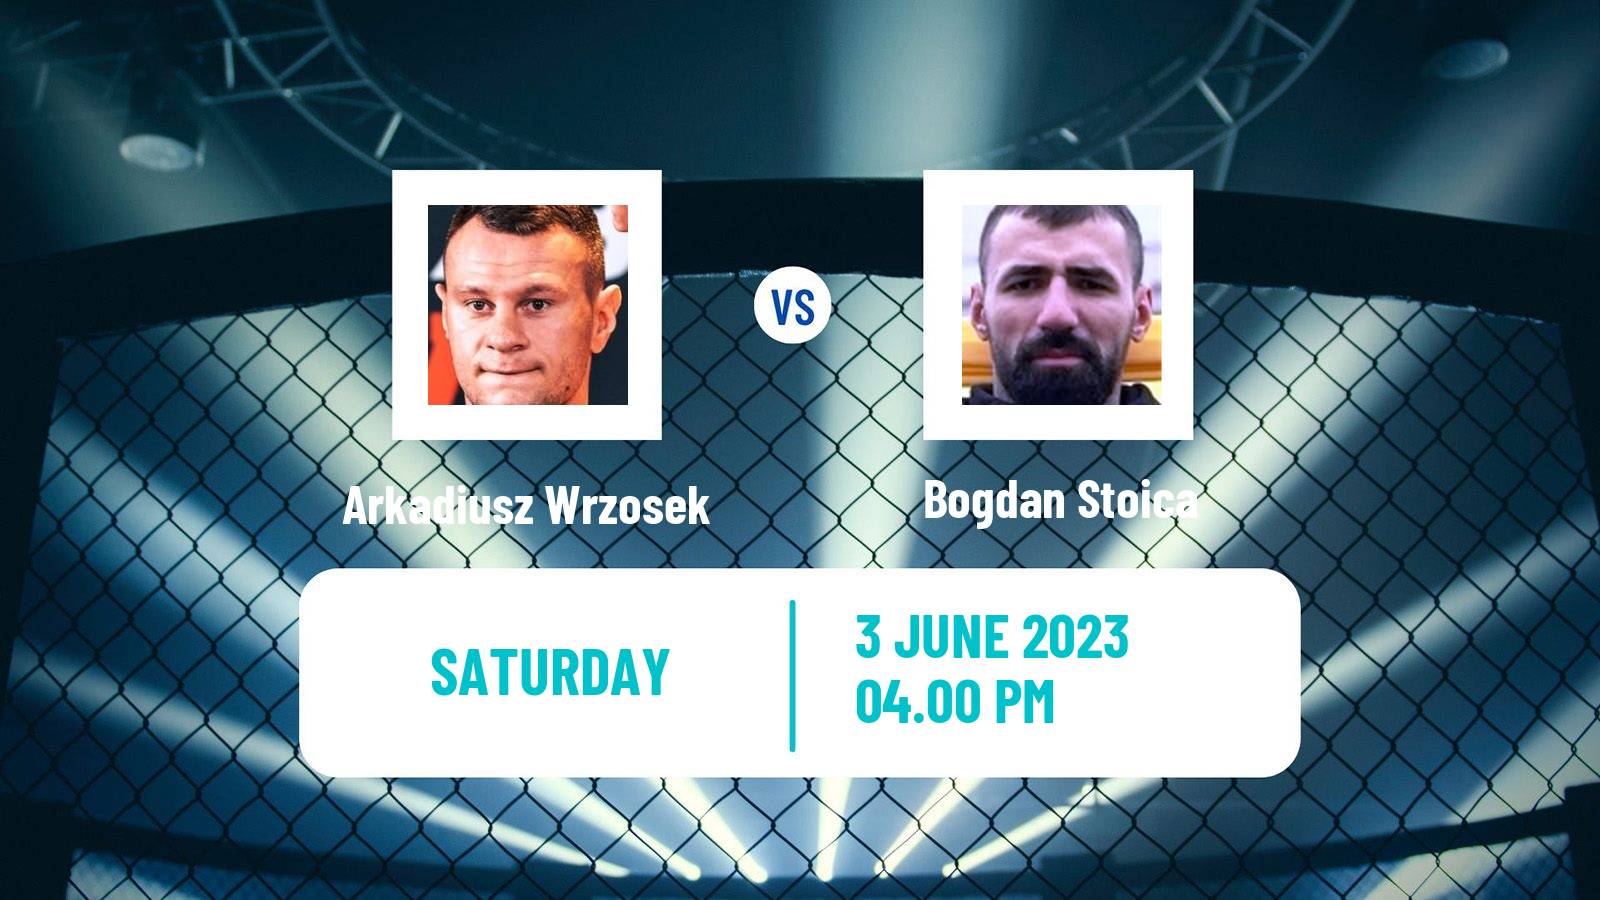 MMA Heavyweight Ksw Men Arkadiusz Wrzosek - Bogdan Stoica